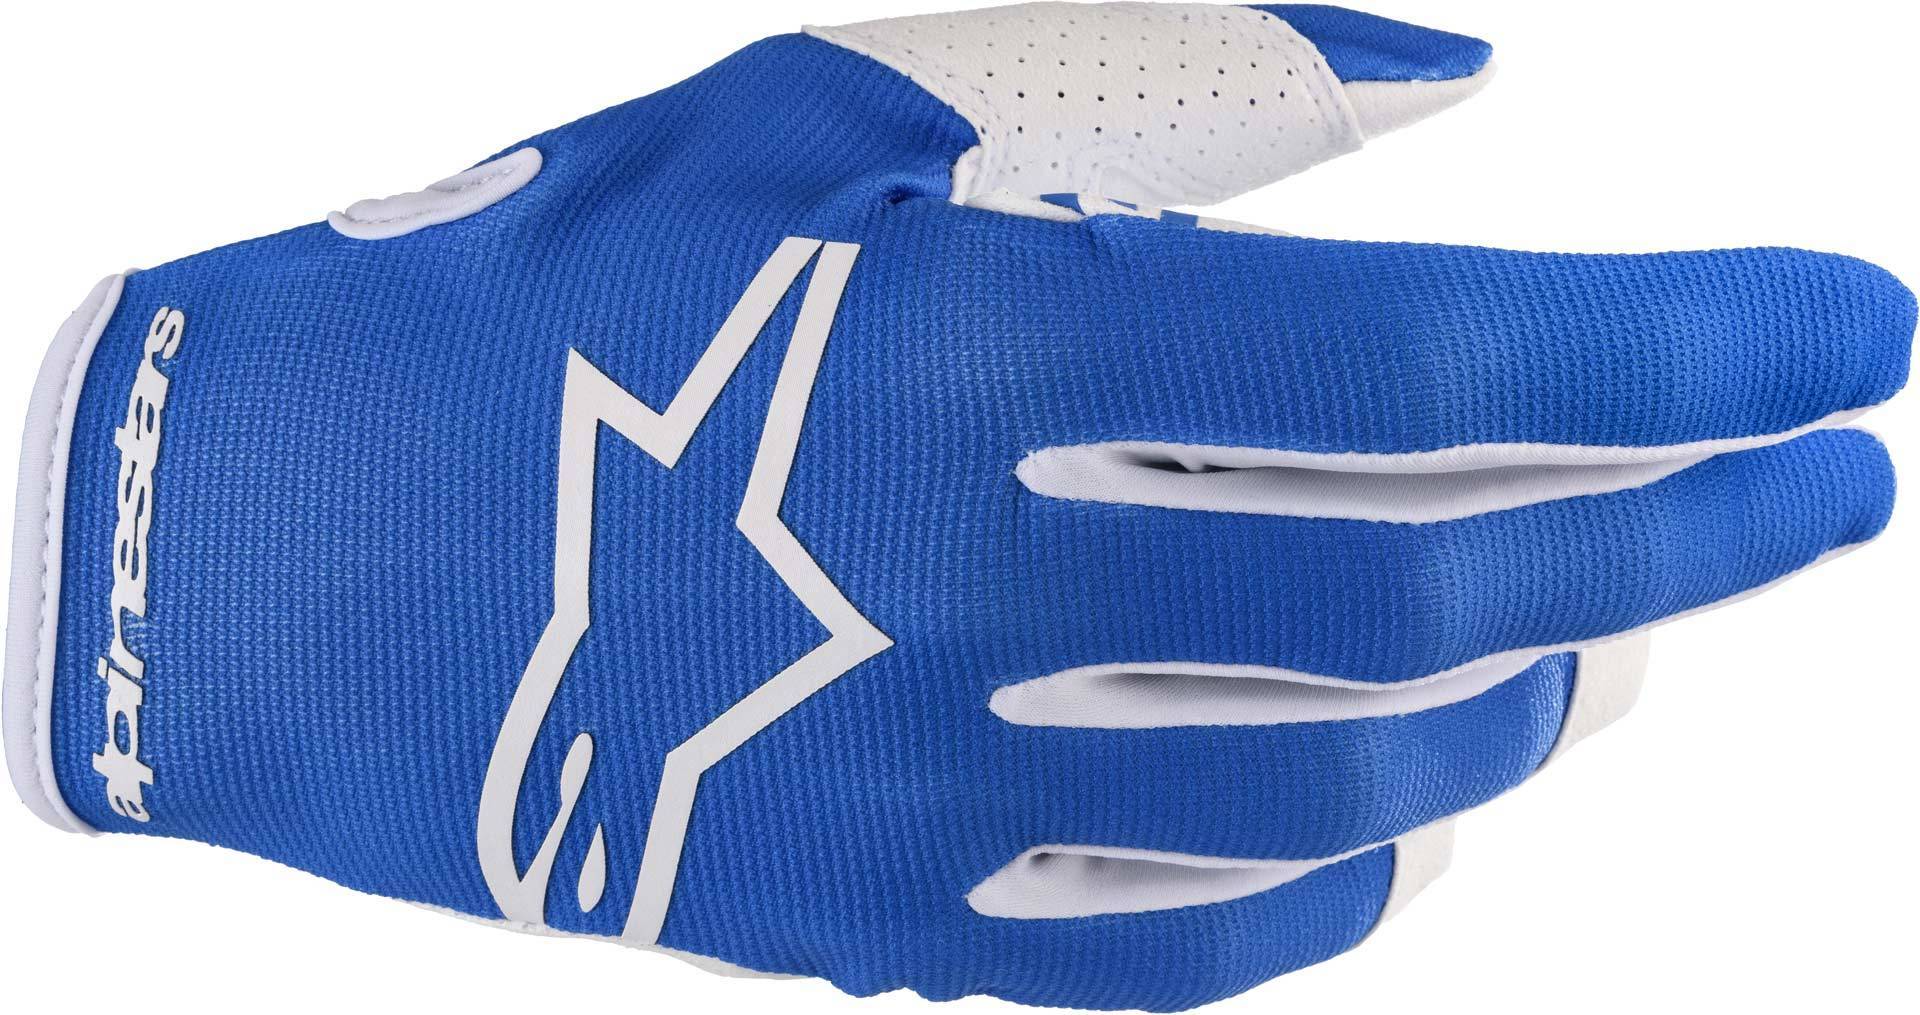 Photos - Motorcycle Gloves Alpinestars Radar Motorcross Gloves Unisex White Blue Size: S 35618237262s 